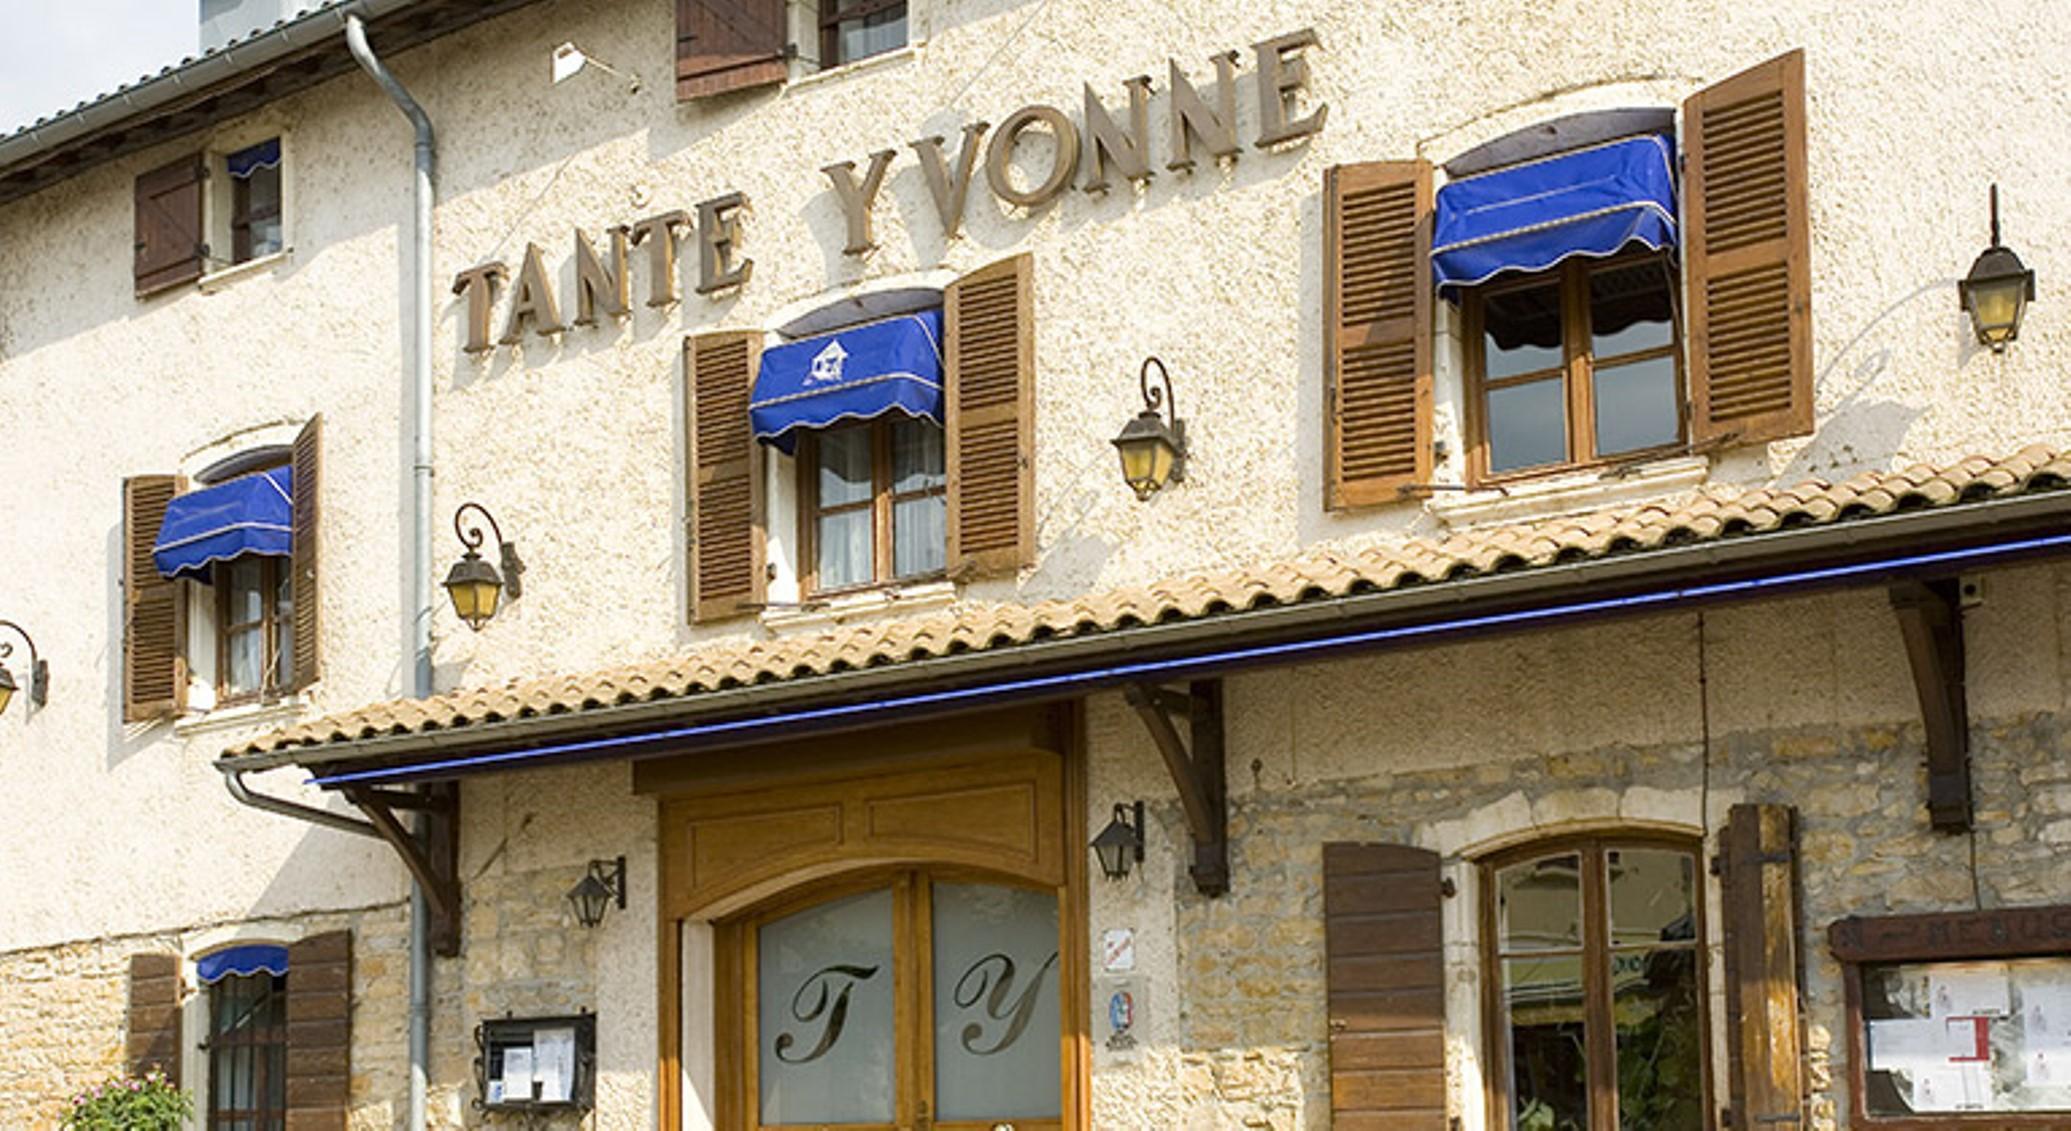 Logis Hotel Tante Yvonne & Son Restaurant Semi-Gastronomique - Lyon Nord Exterior photo